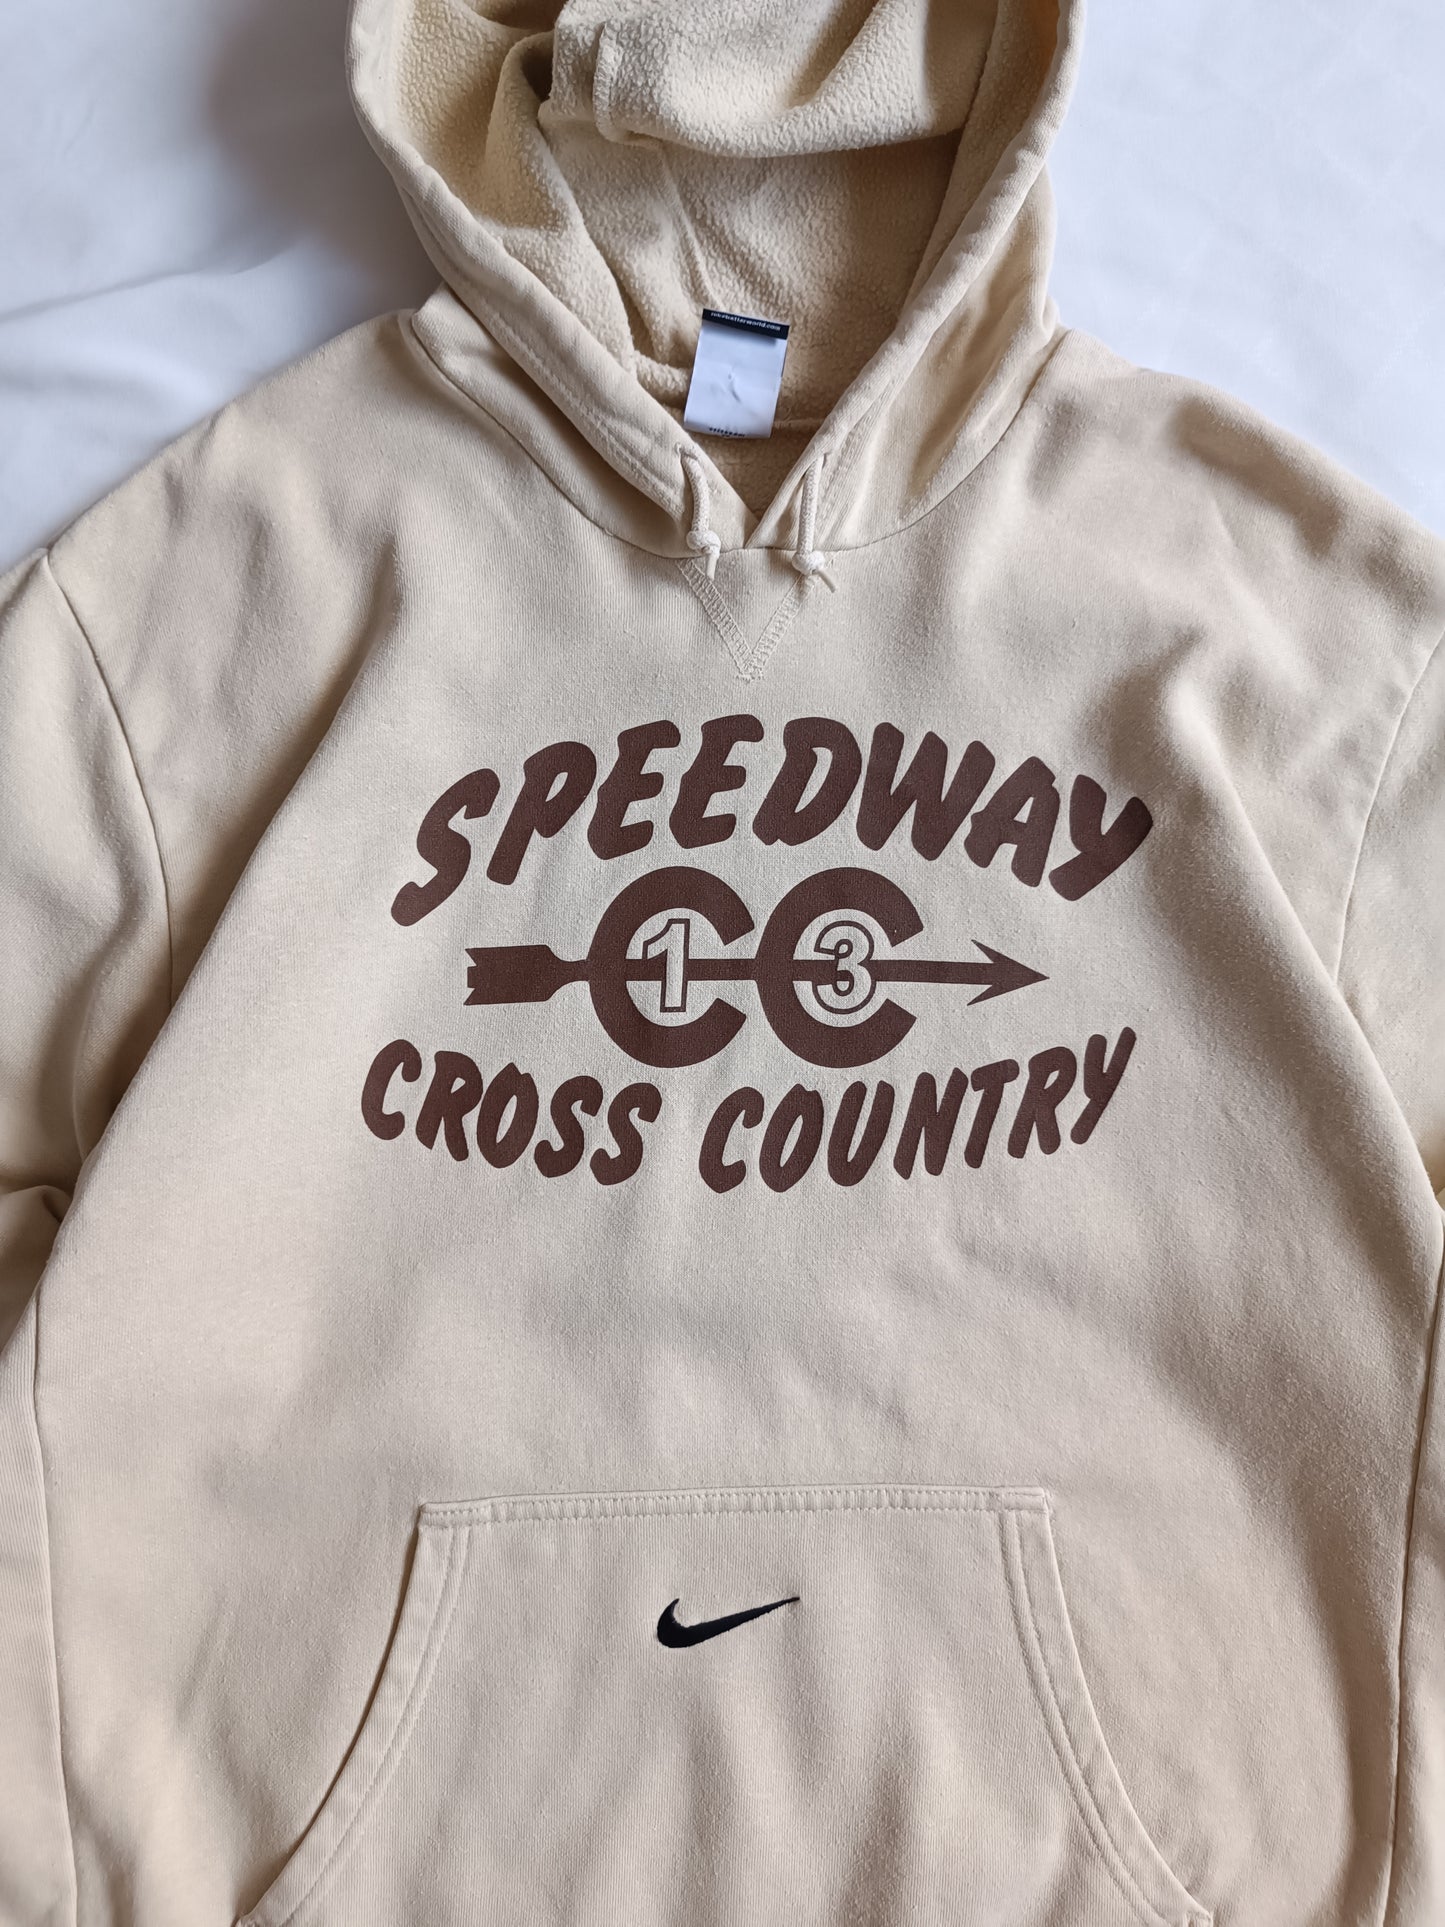 Nike Speedway Cross Country Hoodie - XL